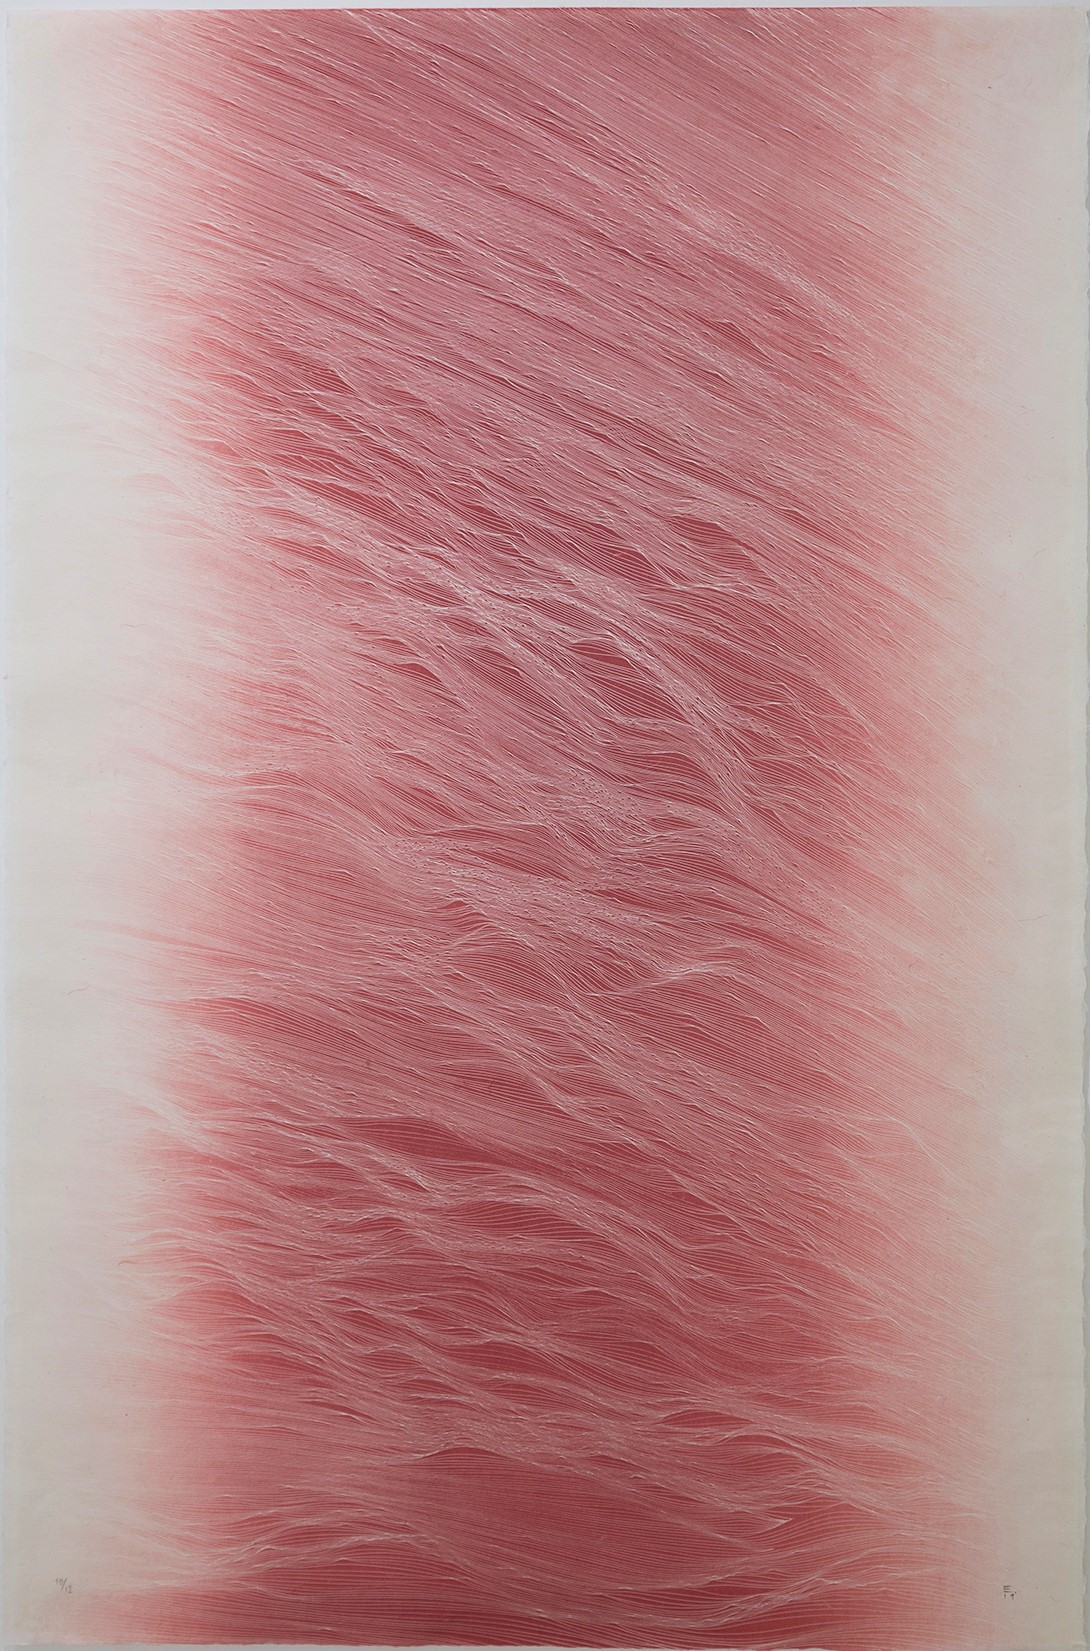 JE Changes red 2019 Ed .12 95x65 cm Etching on Washi Awagami Kozo natural 80 gr paper Estampa Pigment Gallery Galería de Arte en Barcelona Juan Escudero